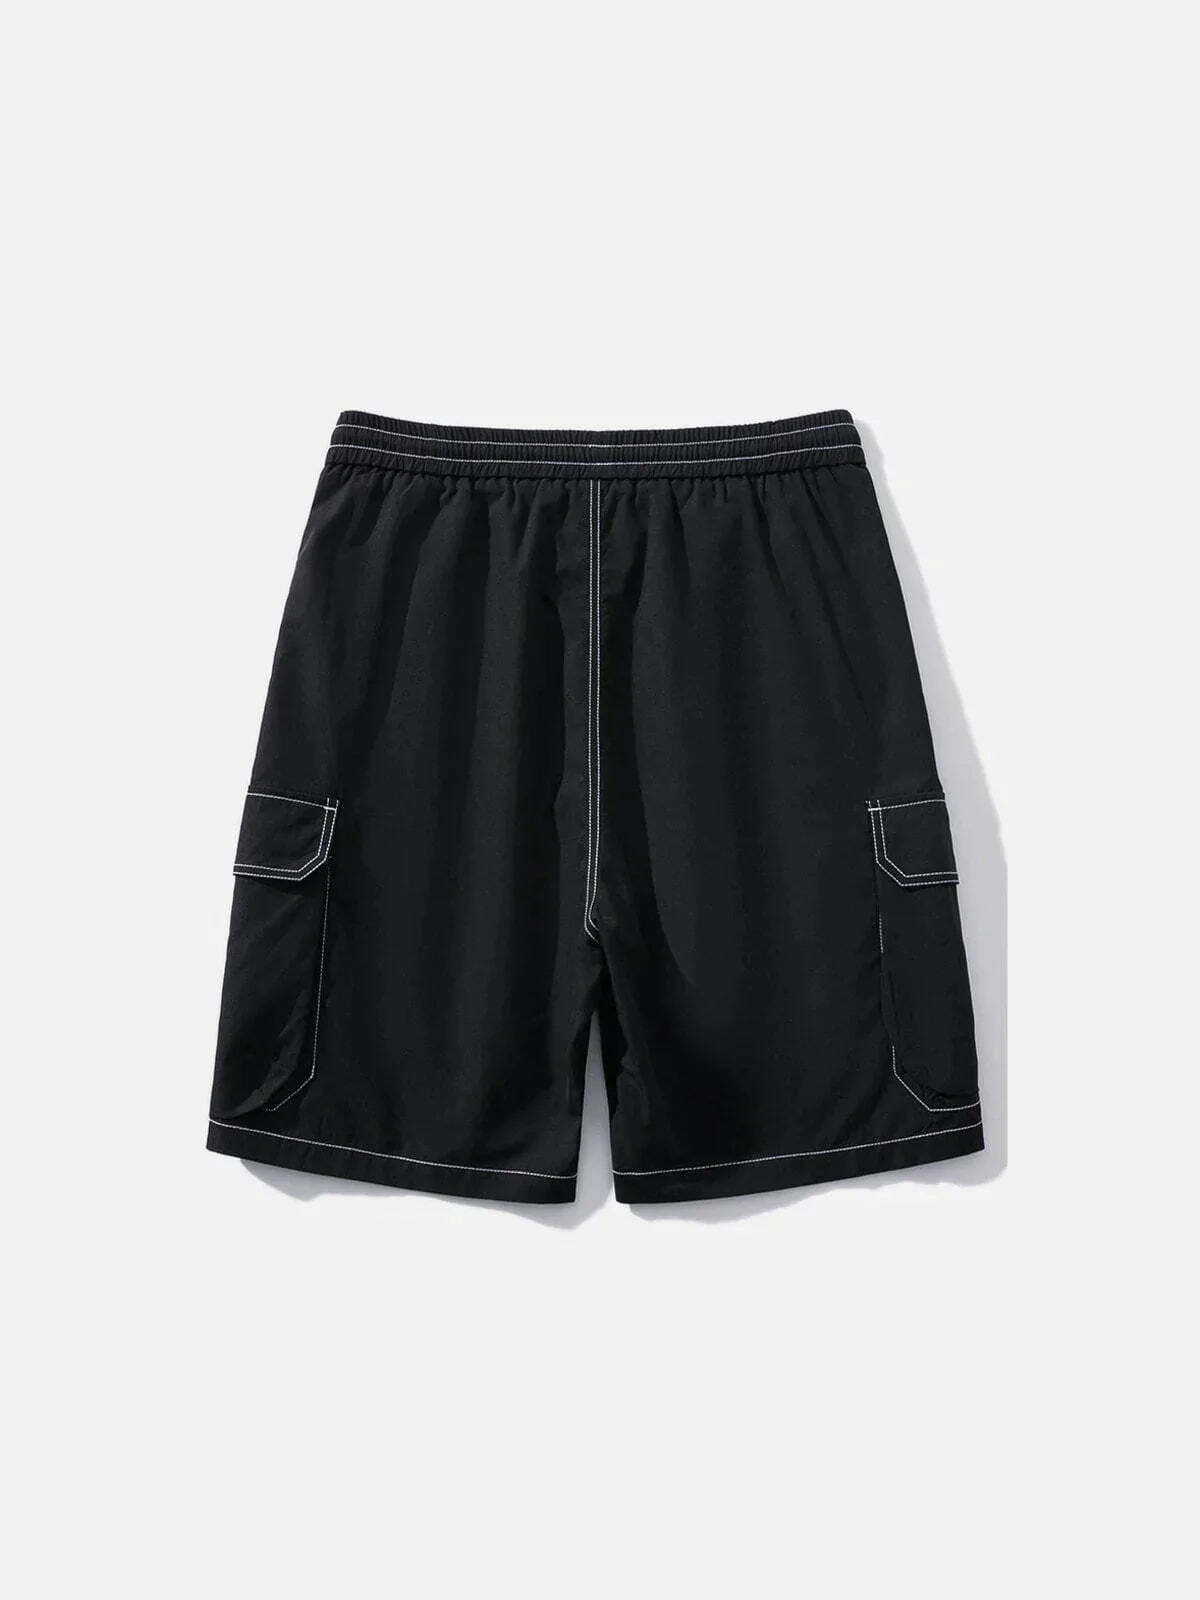 denim pocket panel shorts edgy streetwear essential 1401